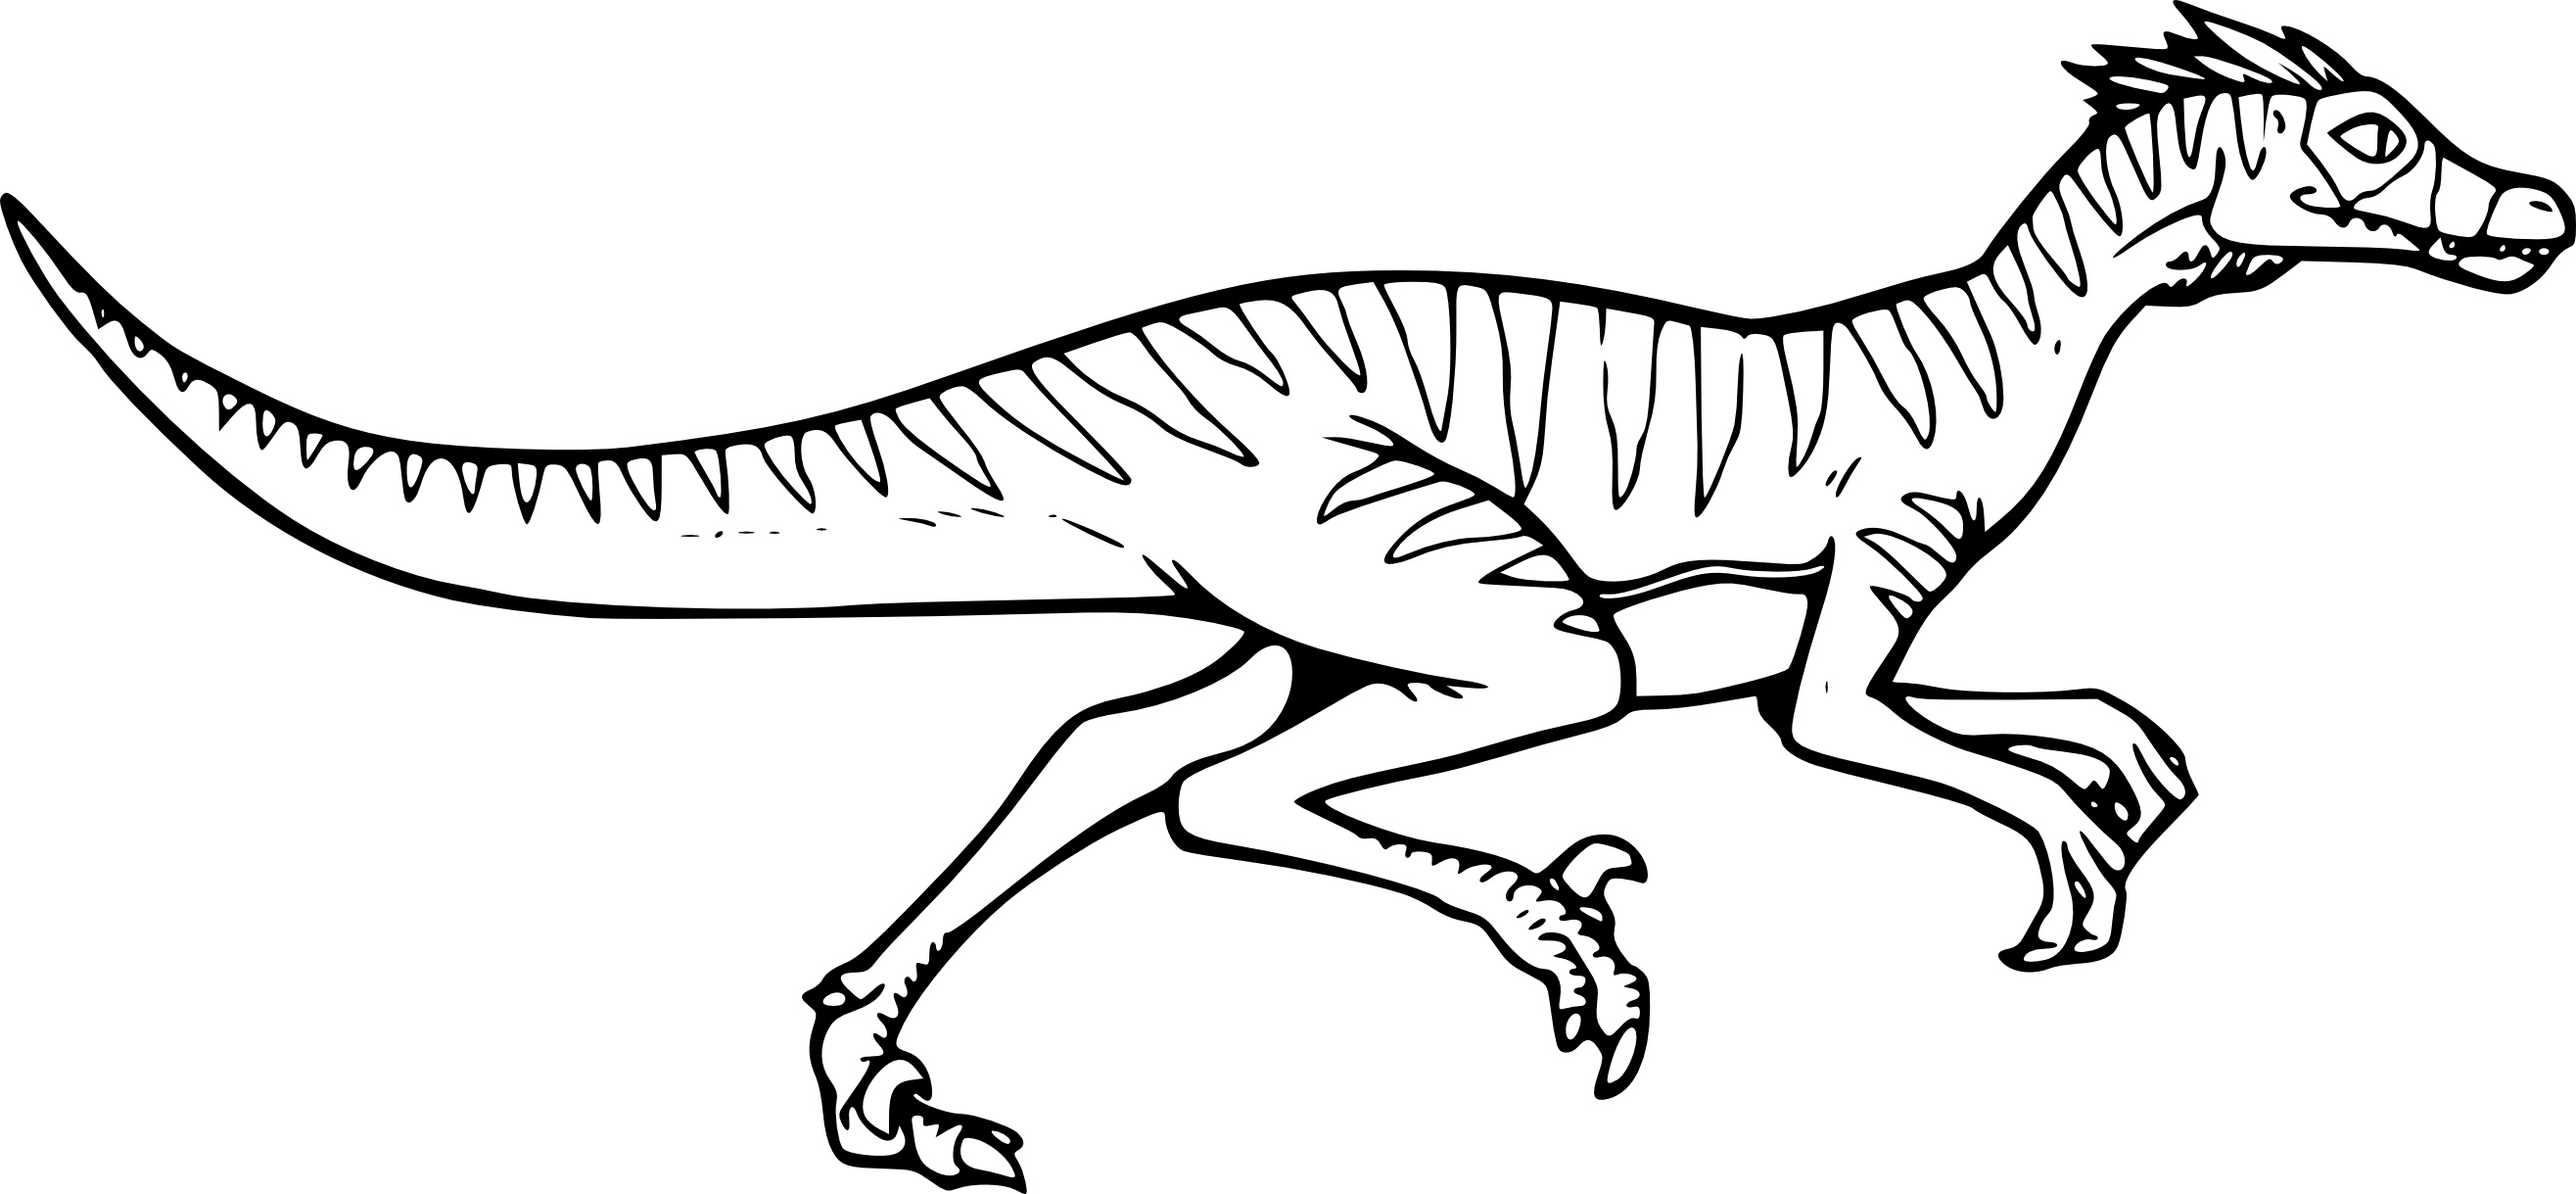 Dessin à Colorier Dinosaure Inspirant Stock Coloriage Dinosaure Velociraptor à Imprimer